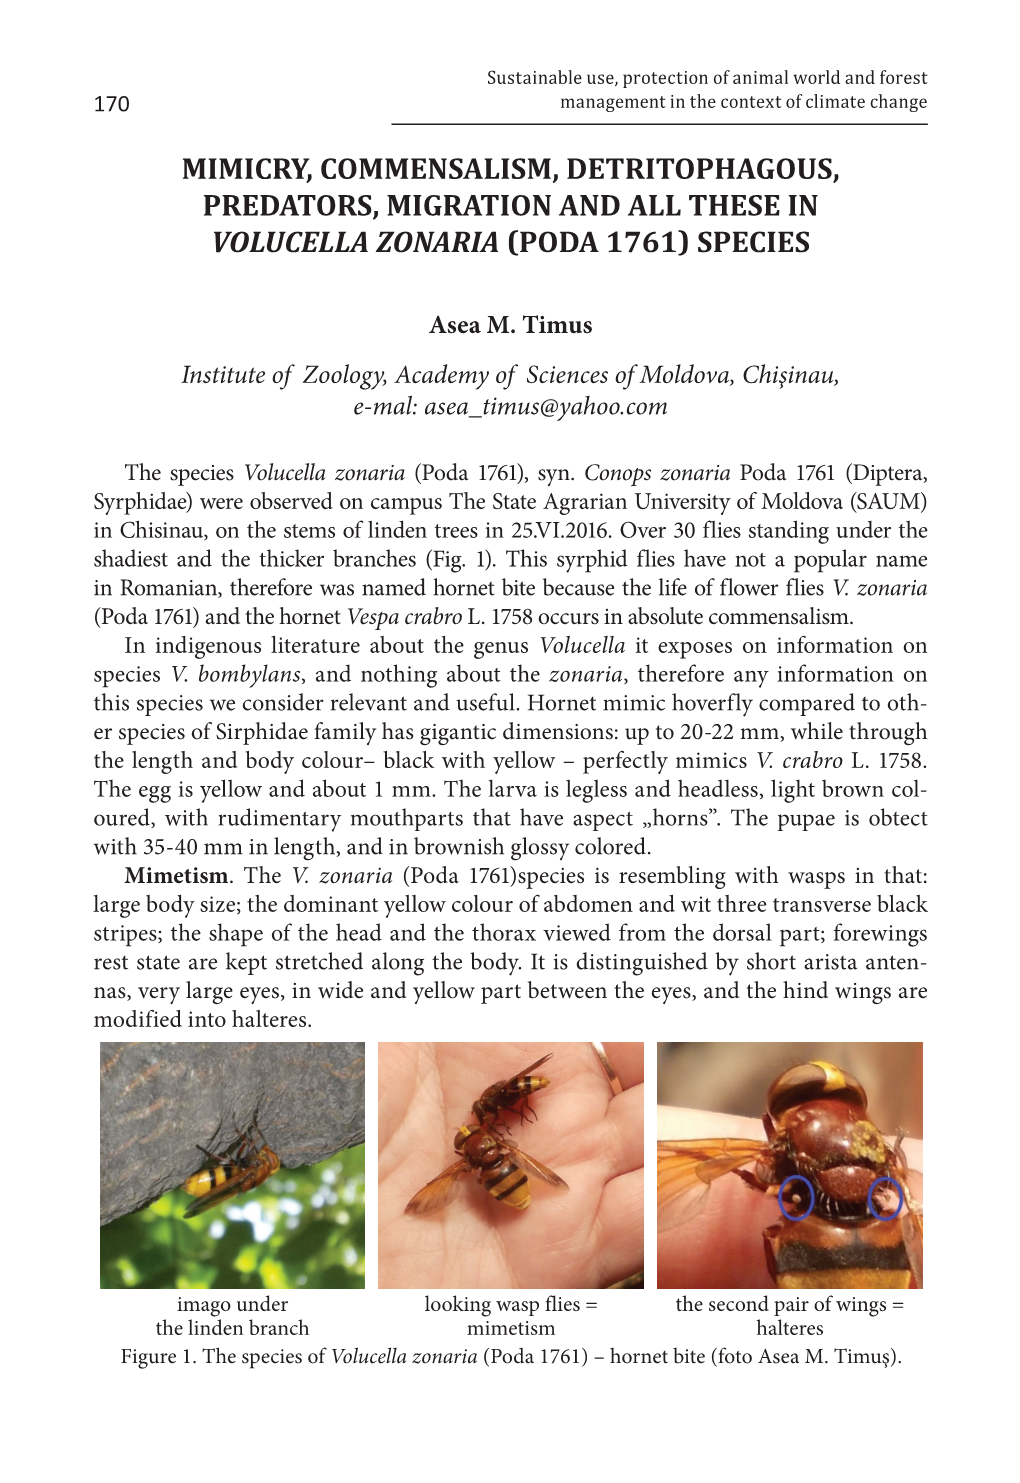 Mimicry, Commensalism, Detritophagous, Predators, Migration and All These in Volucella Zonaria (Poda 1761) Species